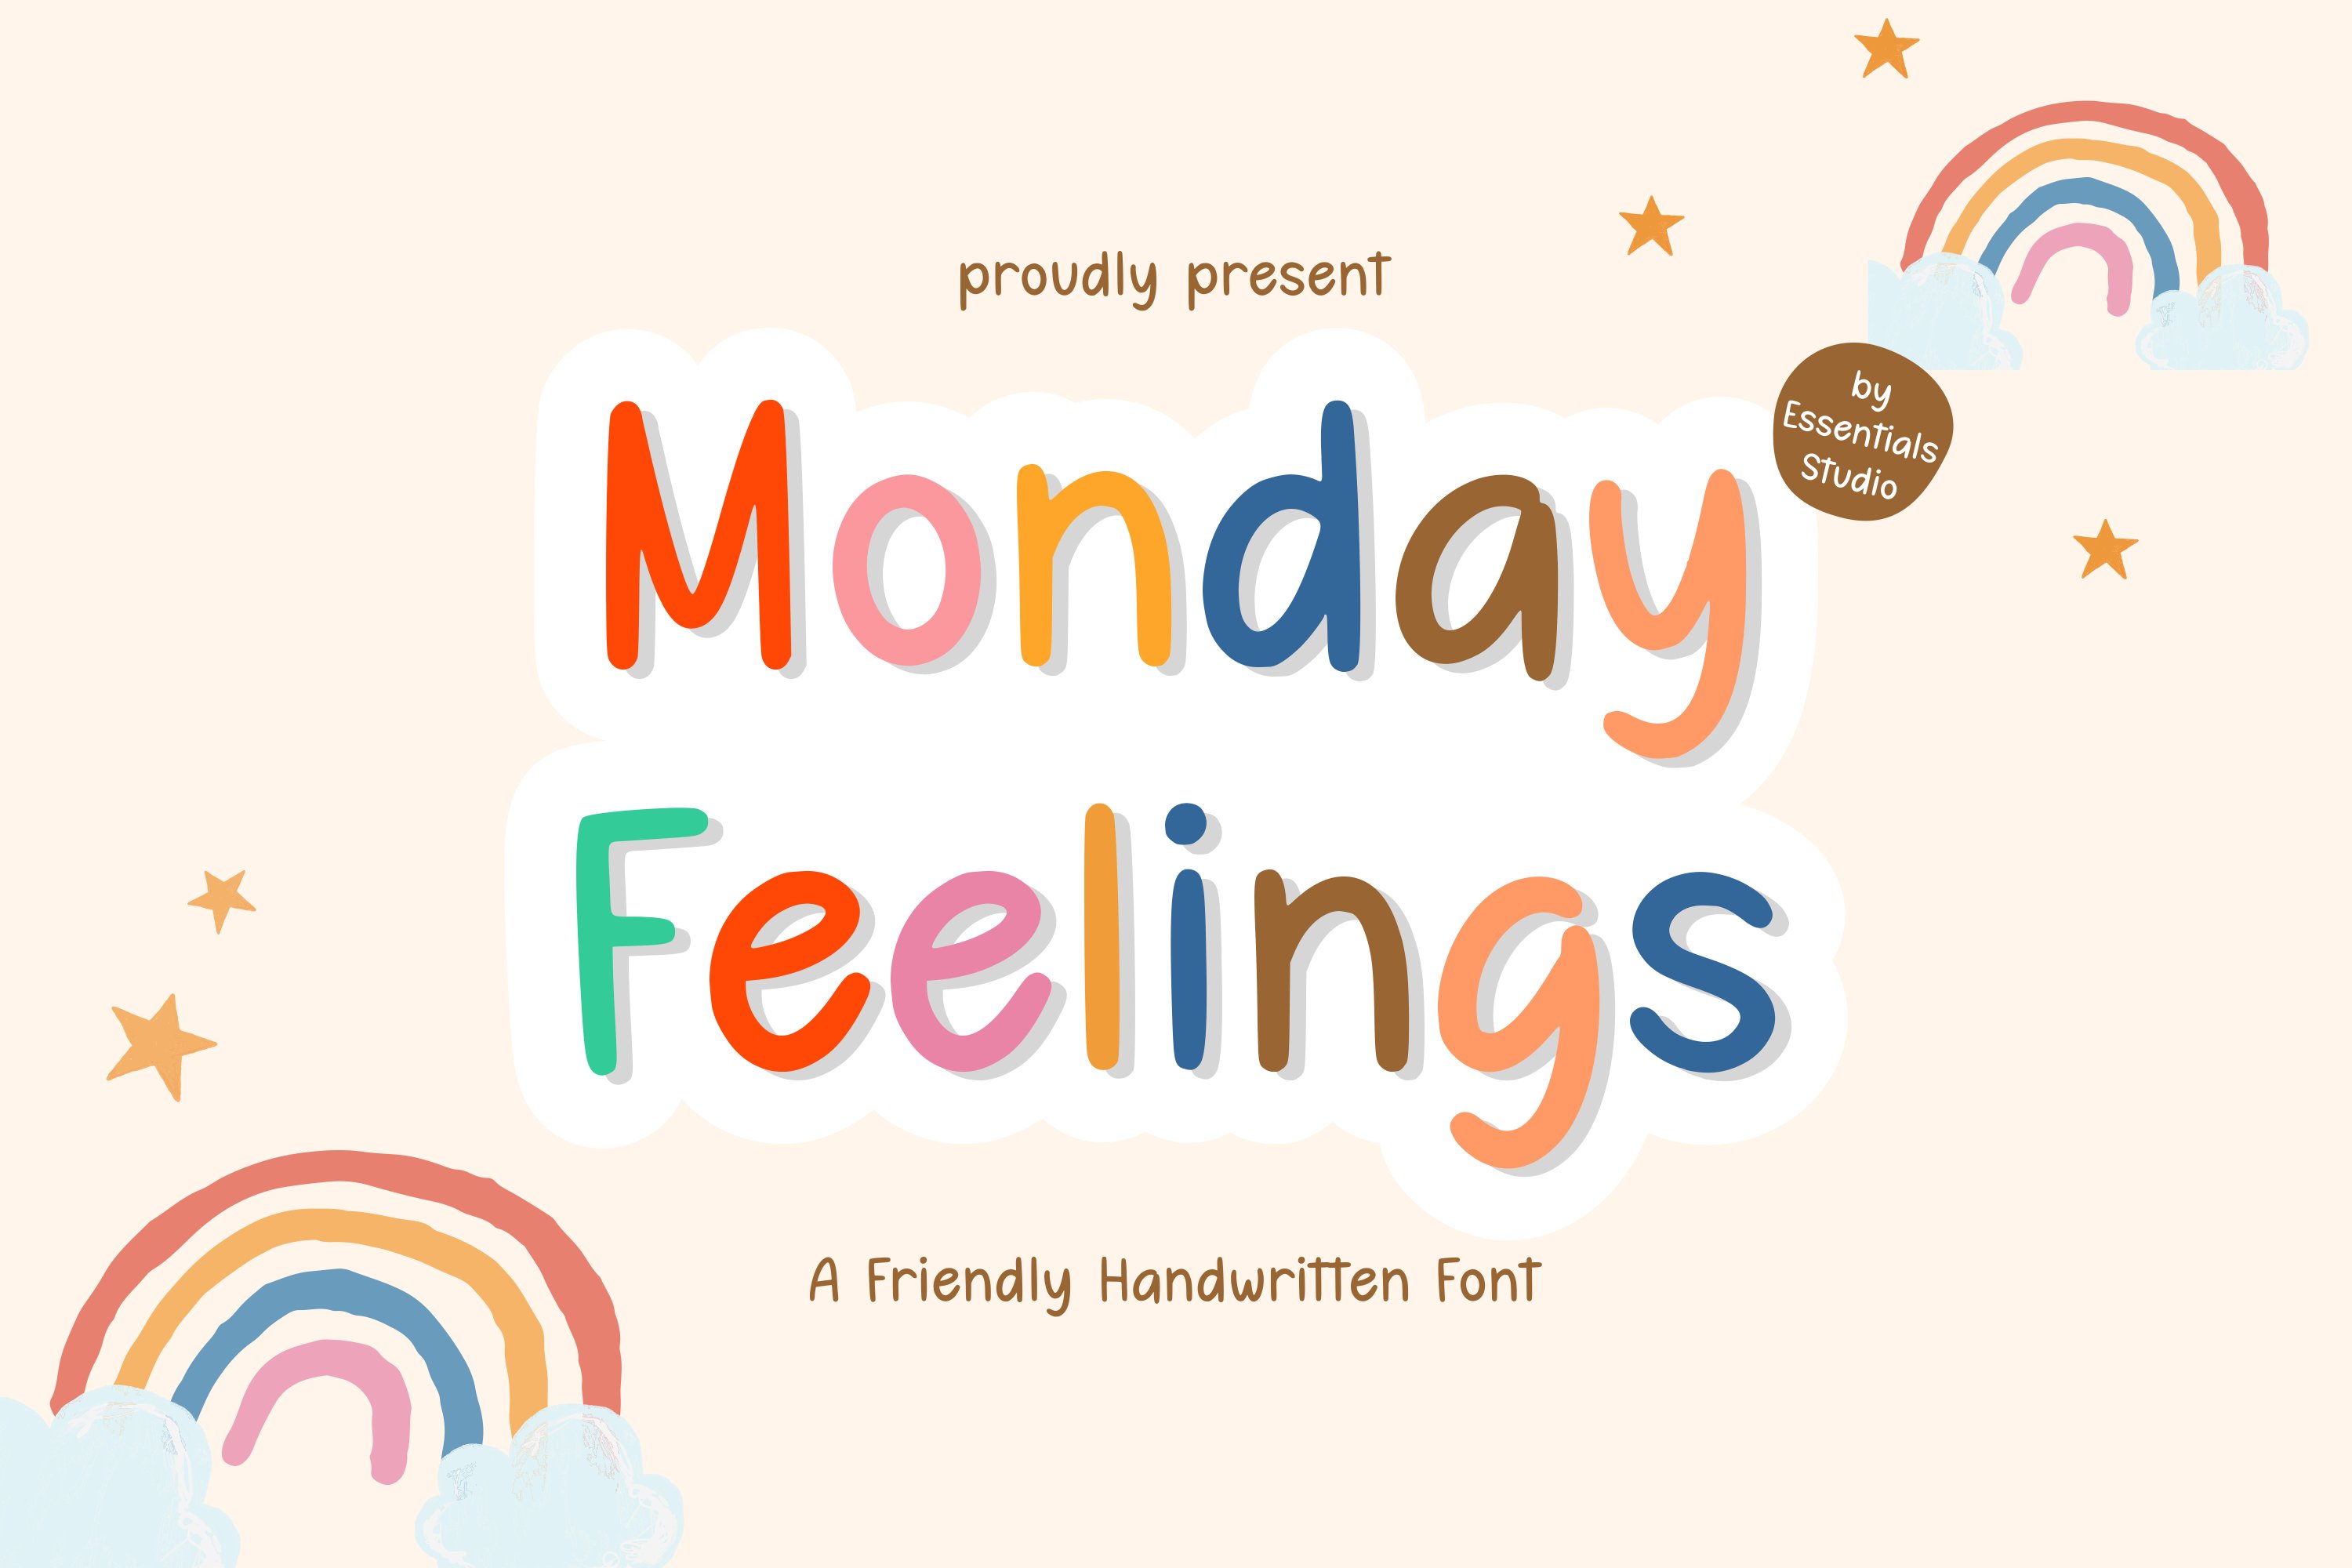 Monday Feelings cover image.